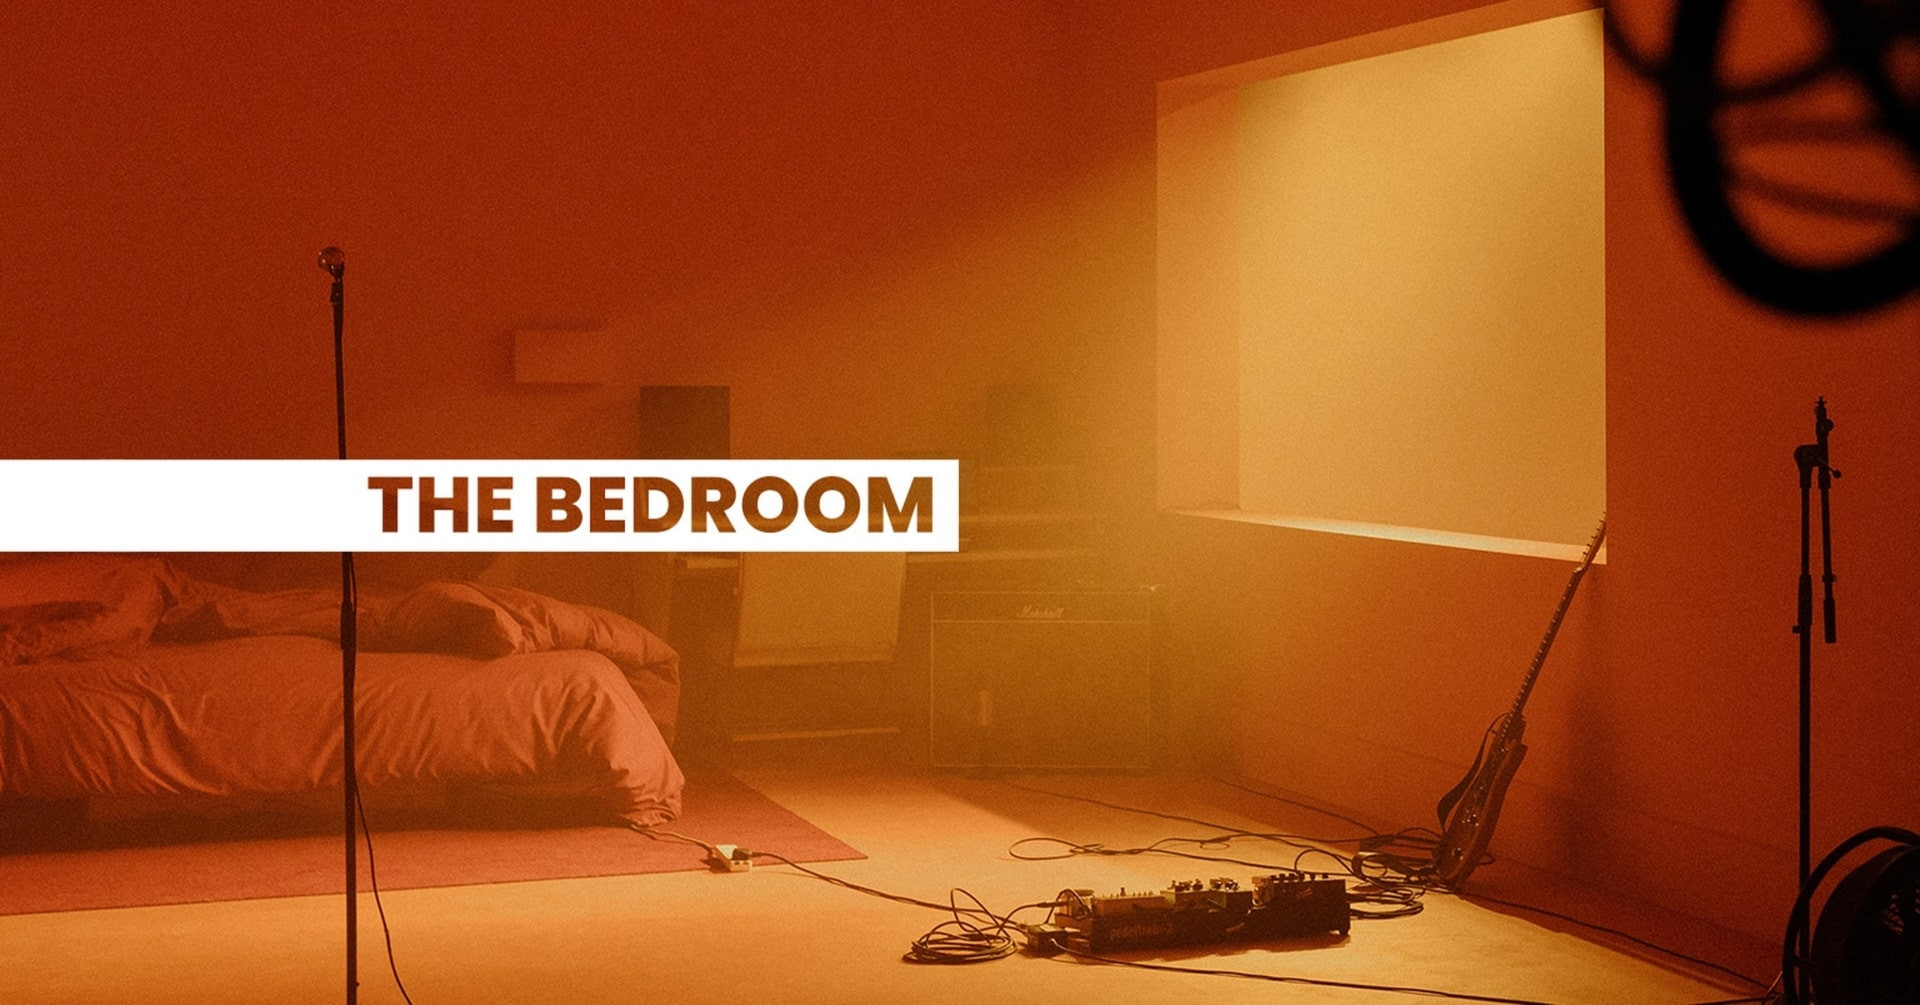 THE BEDROOM by Focusrite - epizod 2 już dostępny!